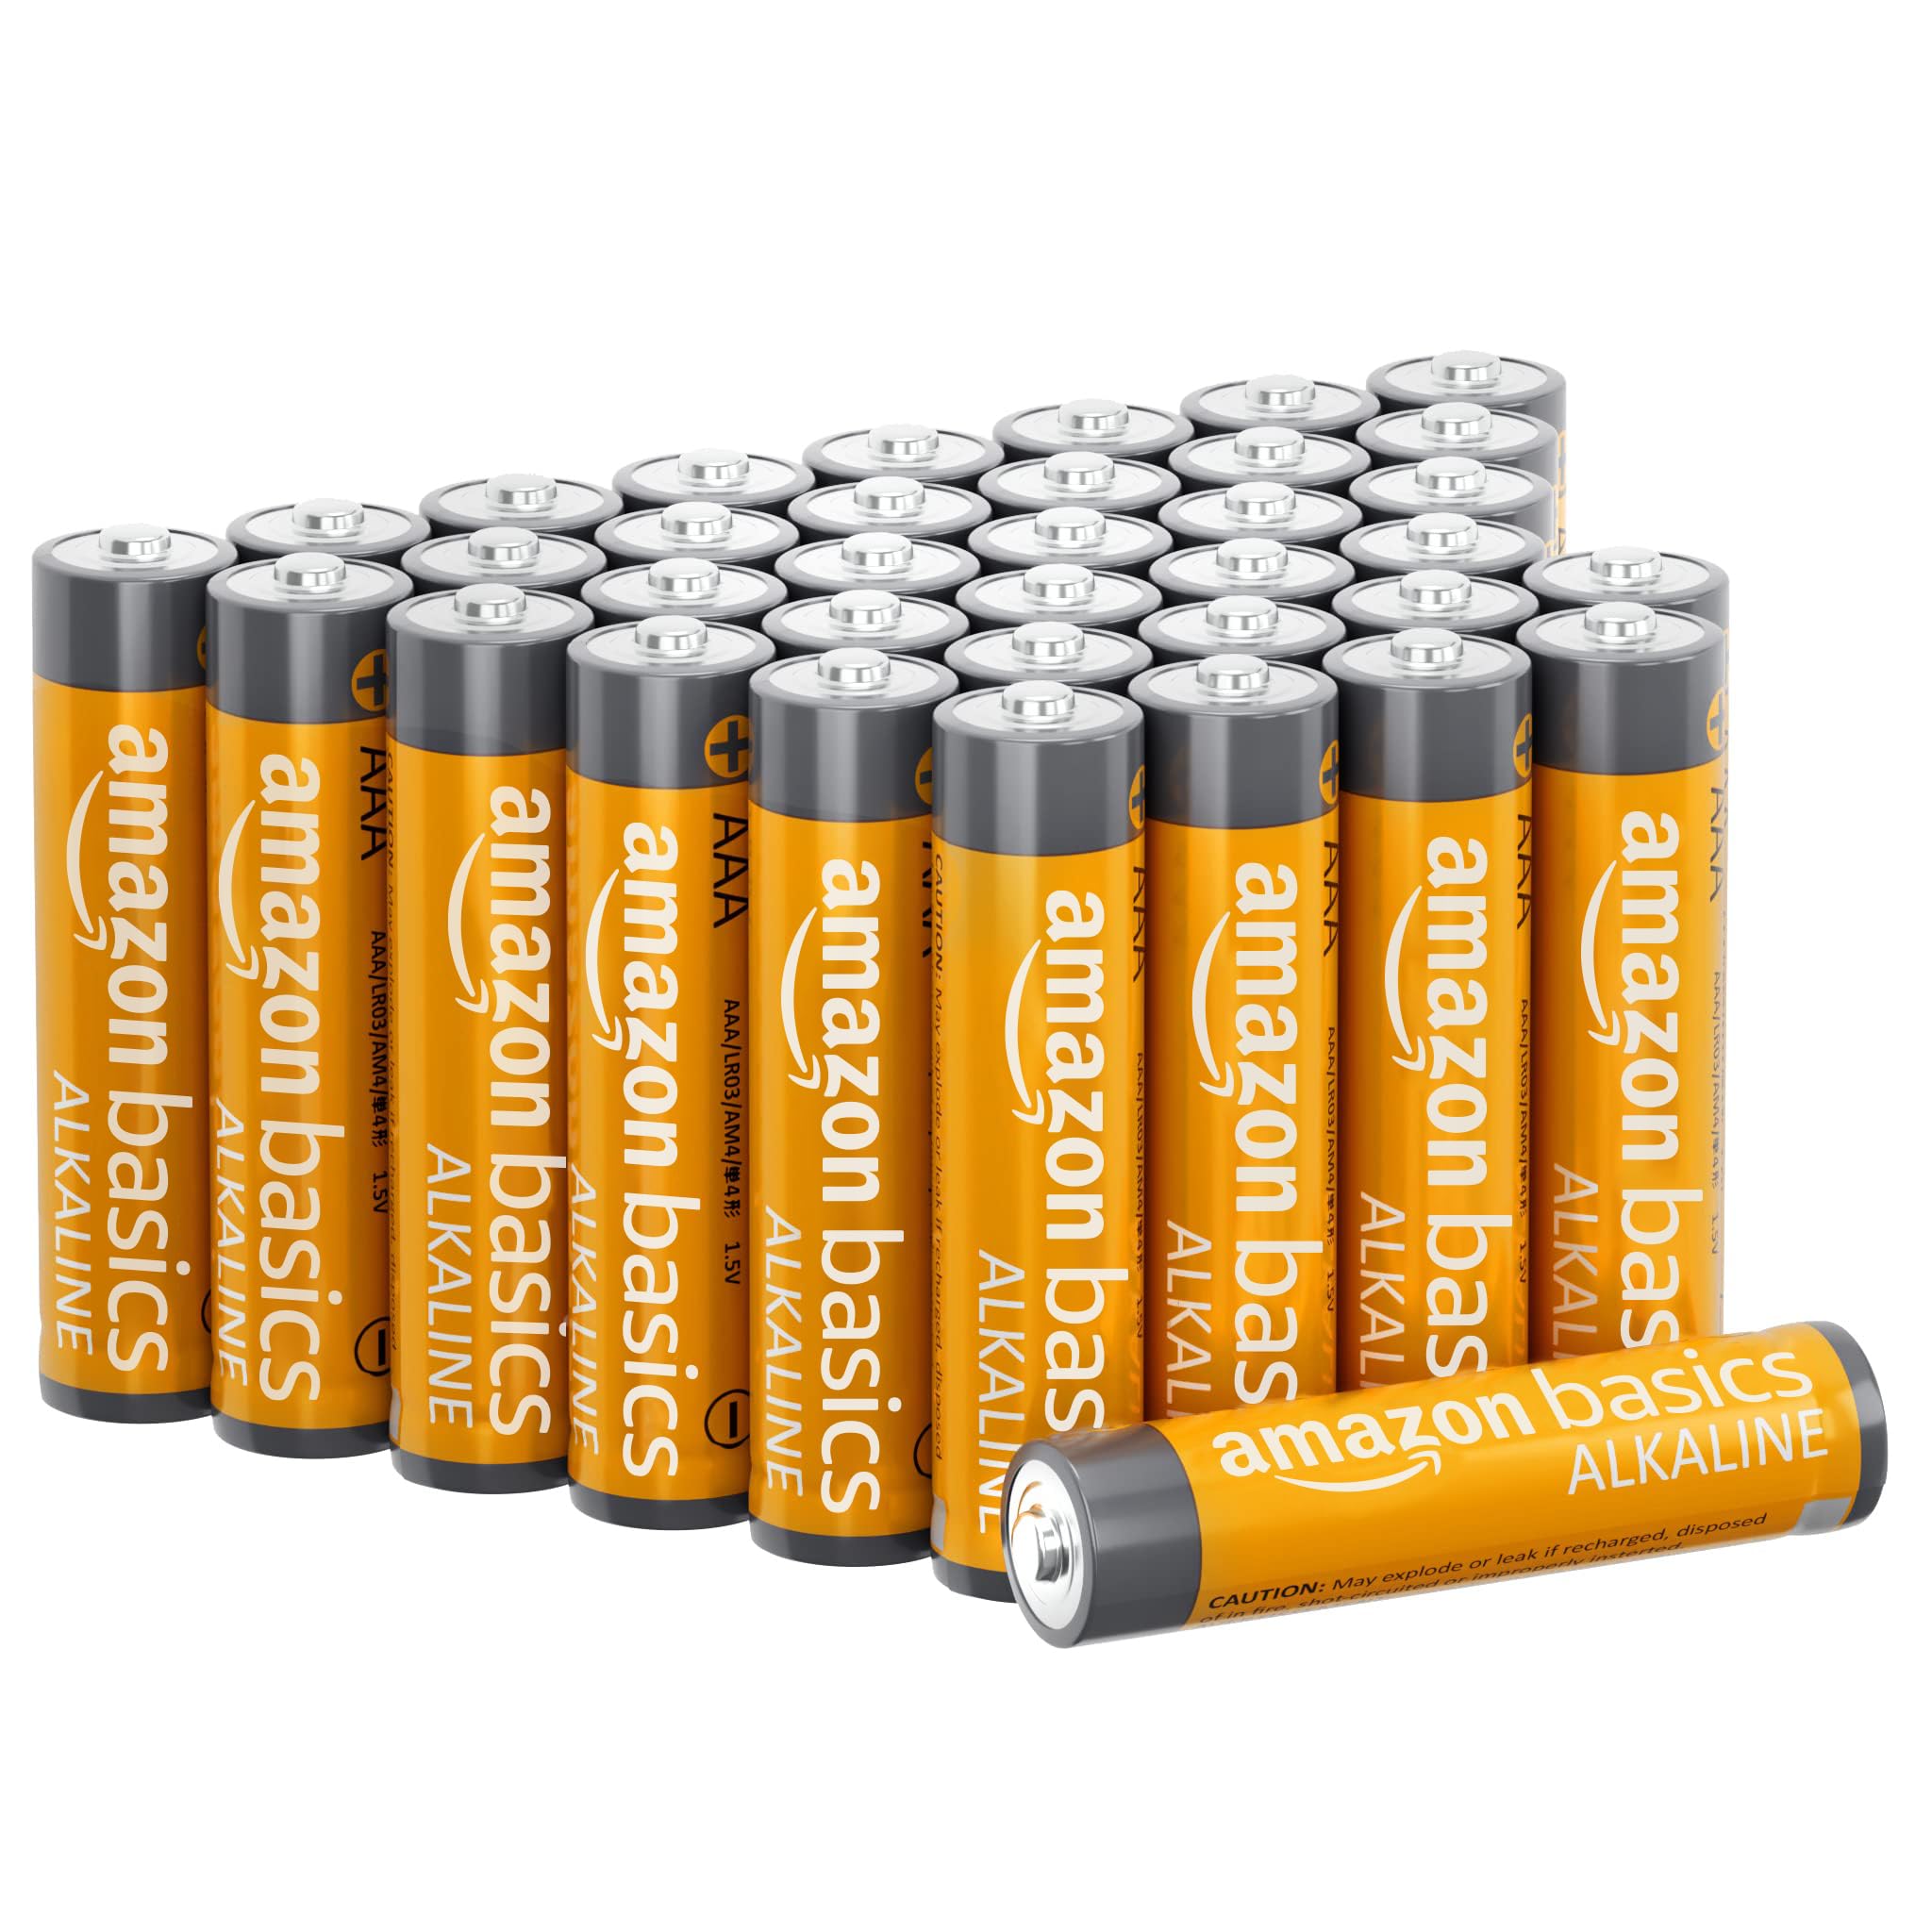 Amazon Basics 36-Pack AAA Alkaline High-Performance Batteries, 1.5 Volt, 10-Year Shelf Life